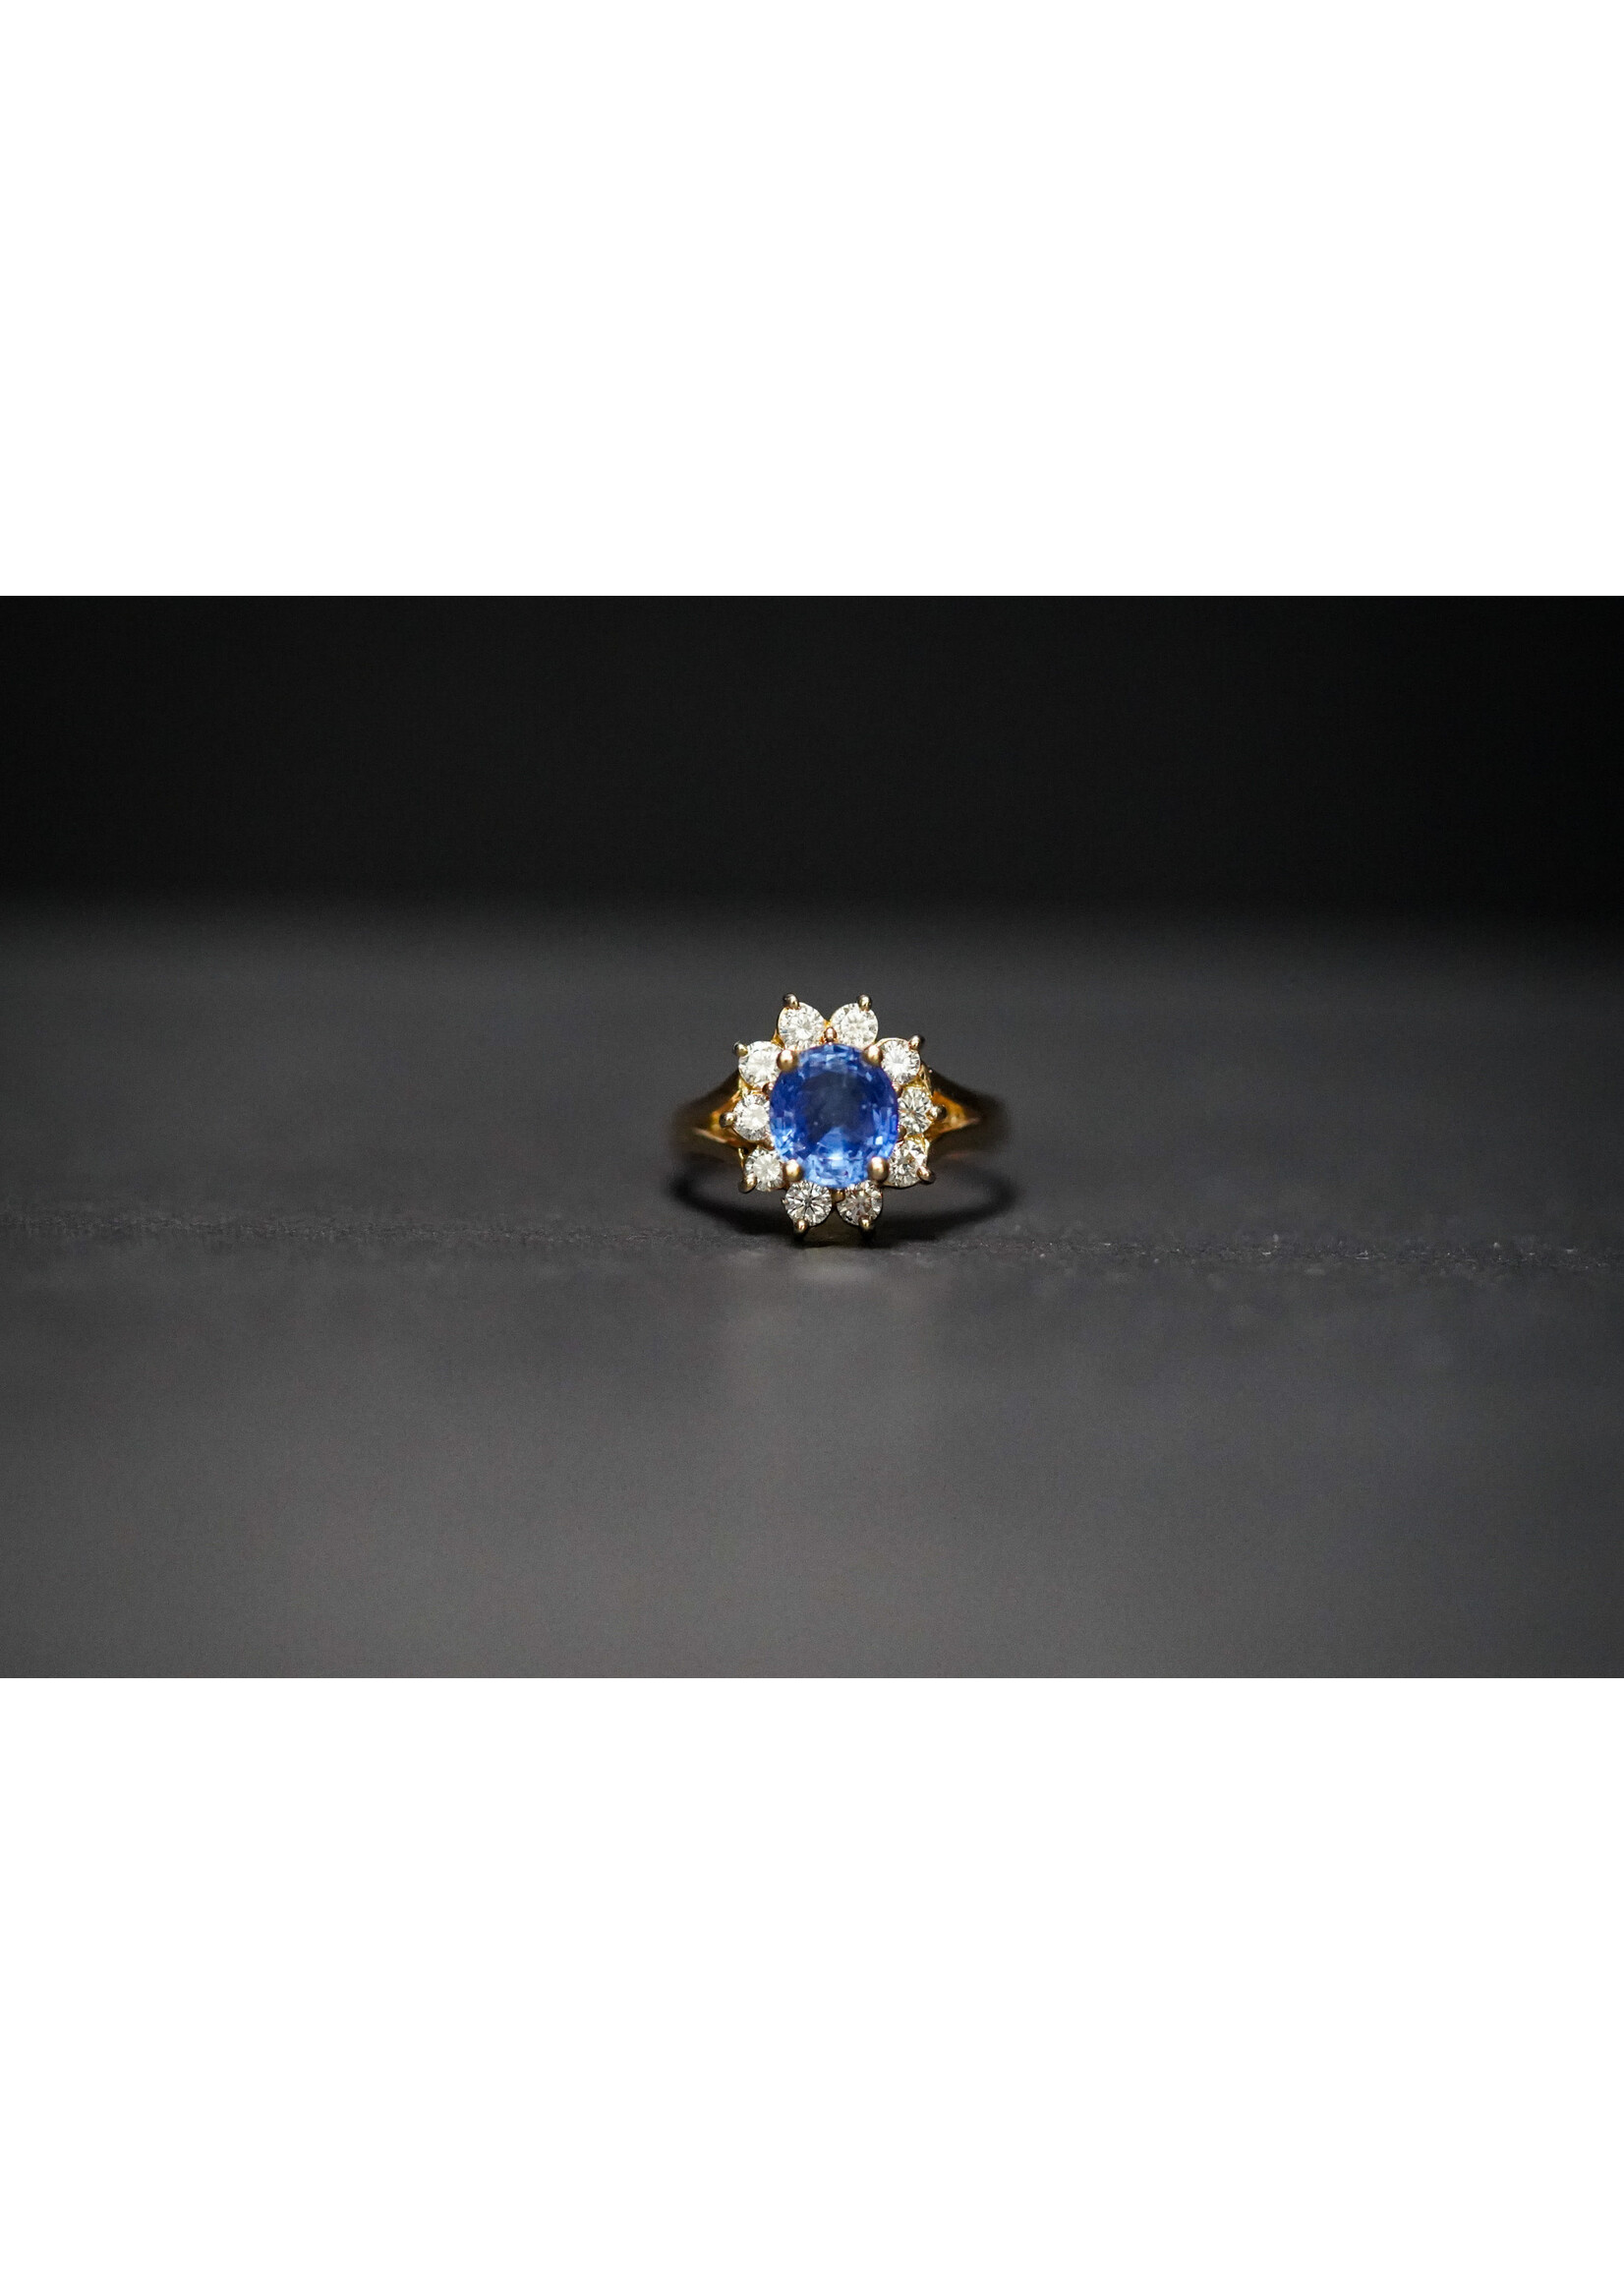 14KY 5.04g 3.35ctw (2.75ctr) Sapphire & Diamond Halo Ring (size 7)